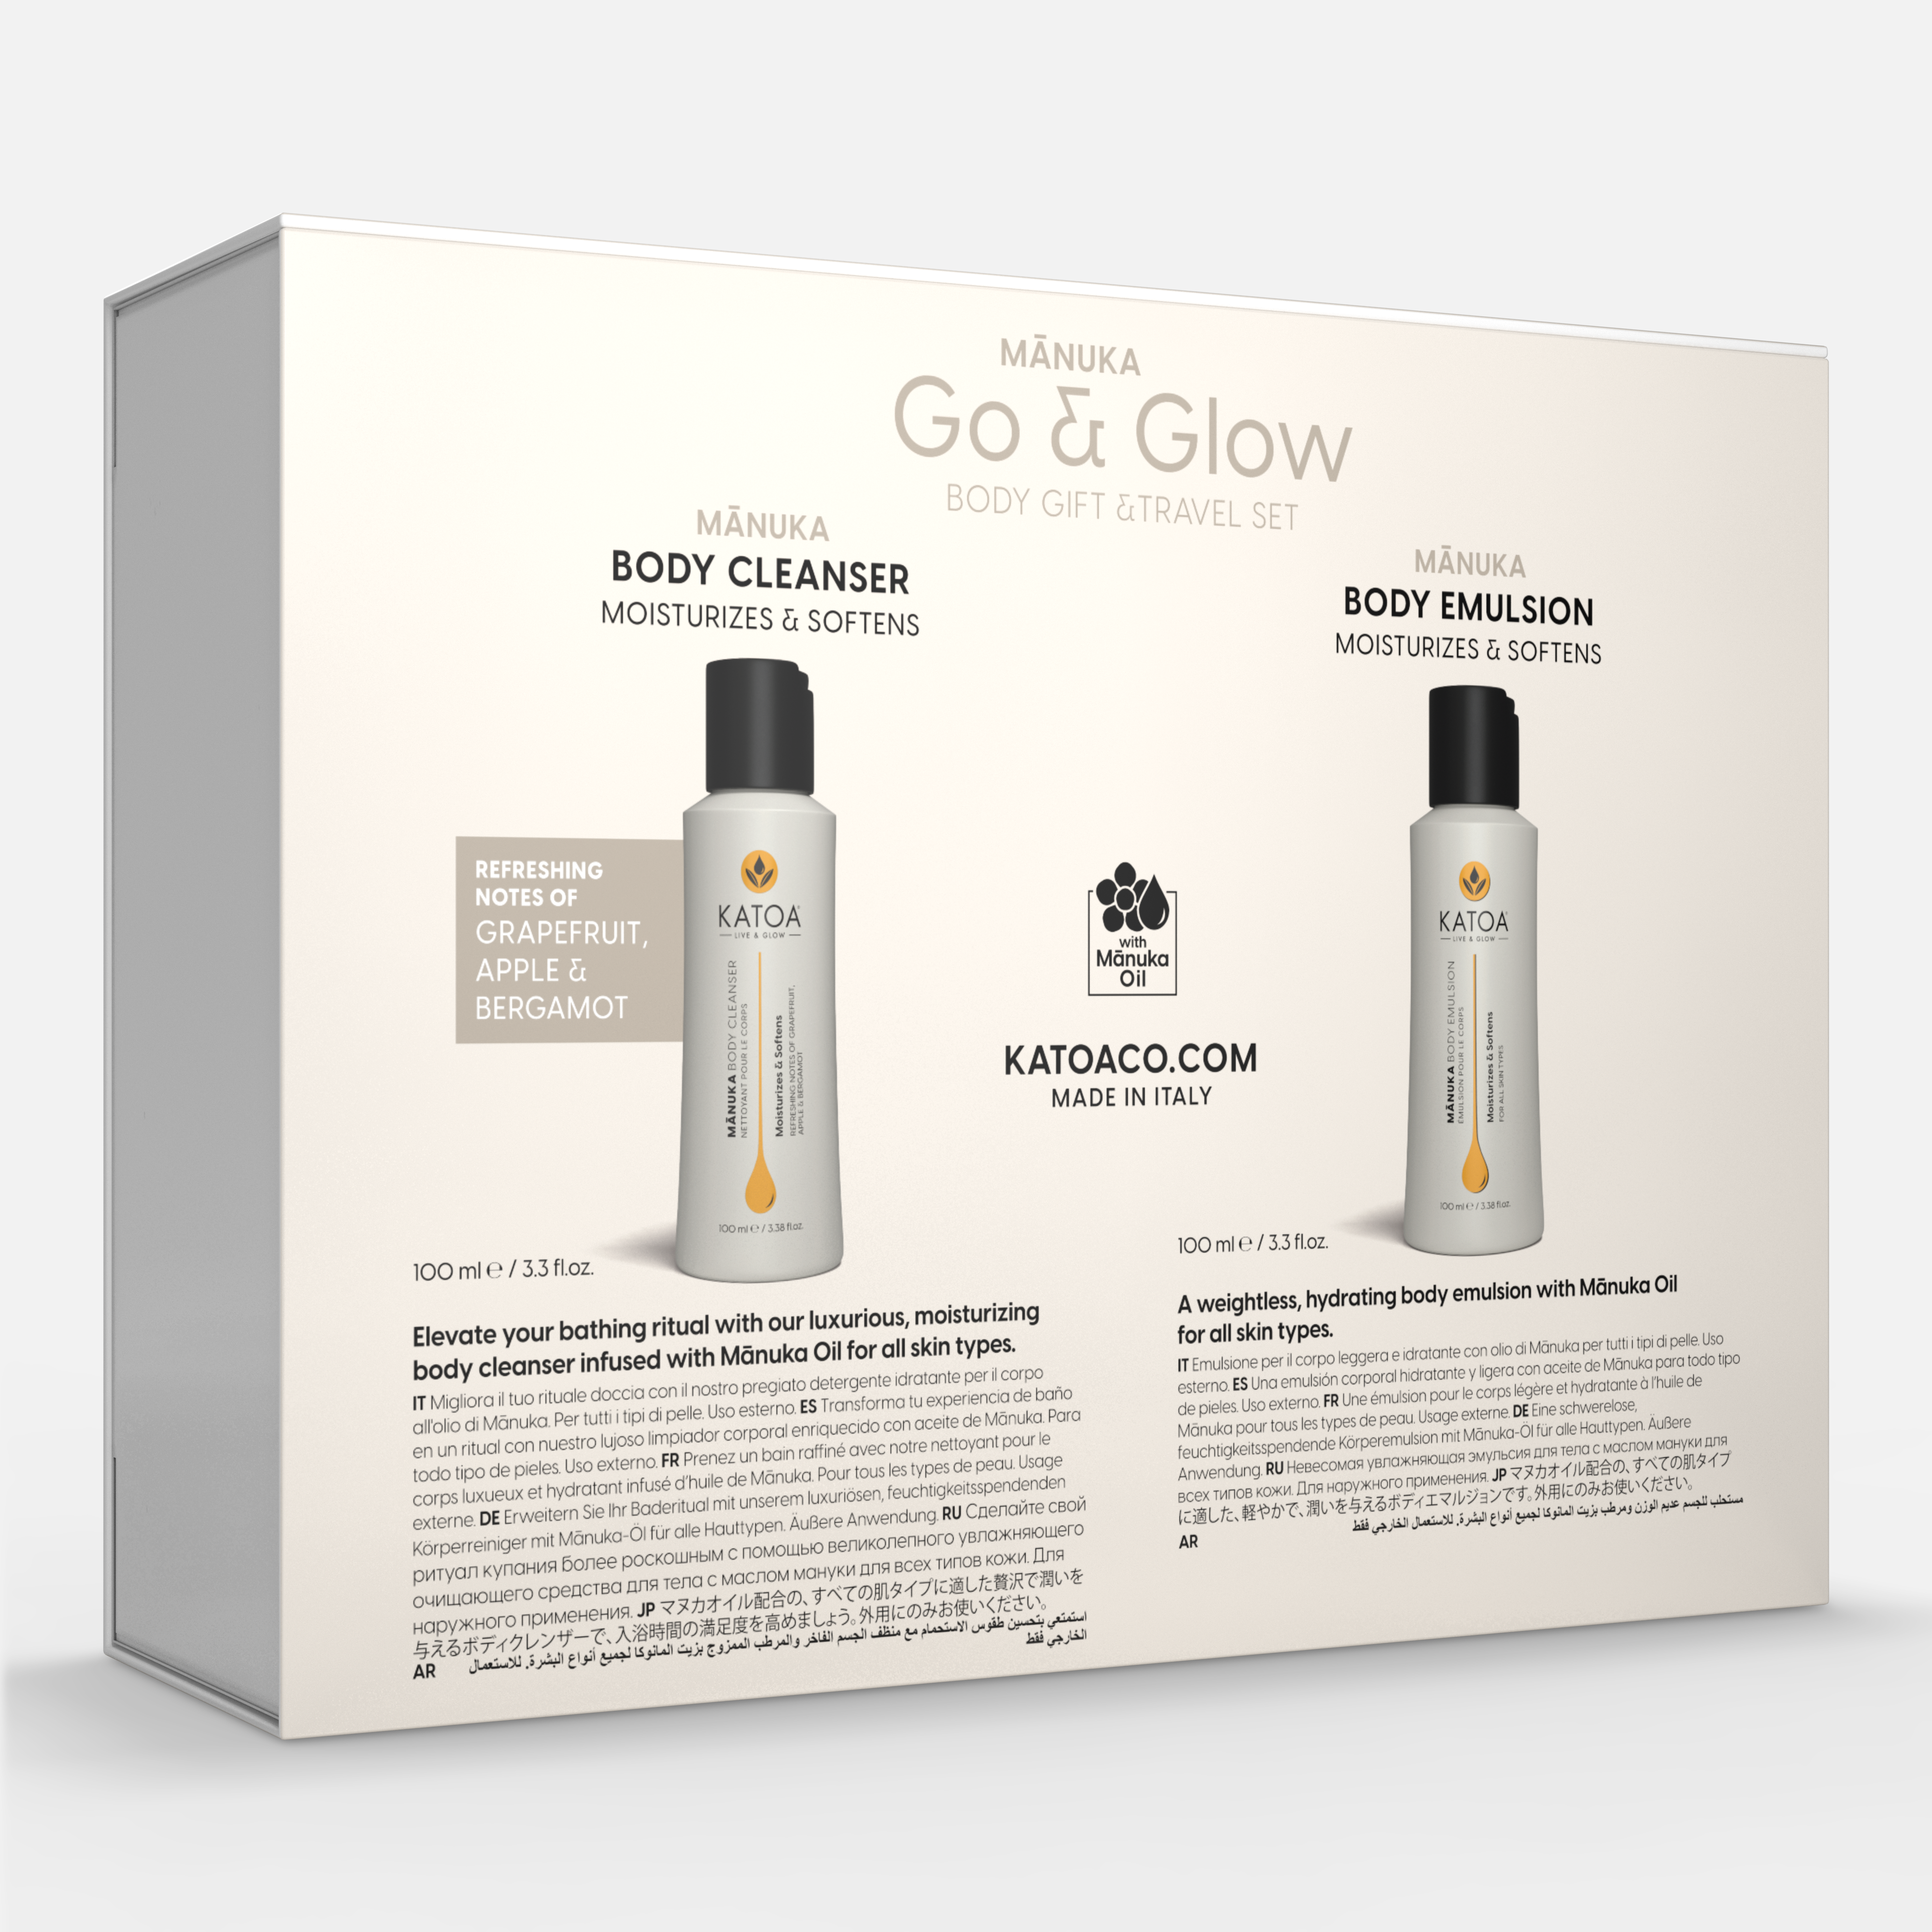 Go & Glow Body Gift & Travel Set